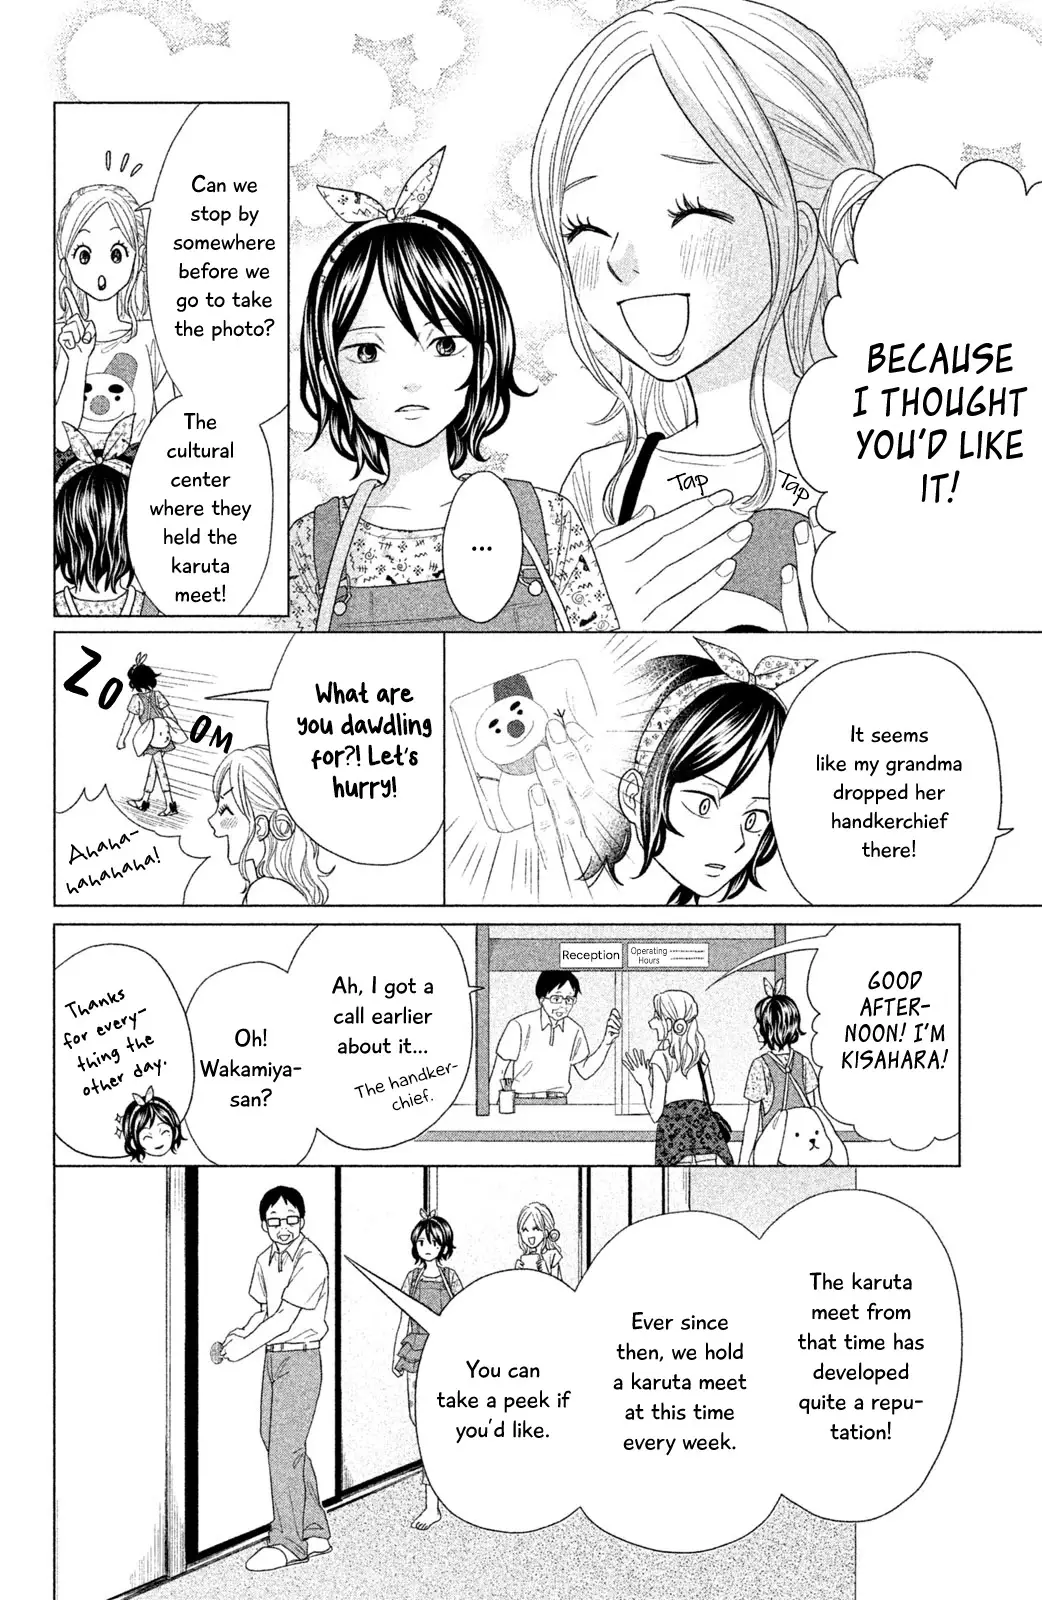 Chihayafuru: Middle School Arc - 12 page 7